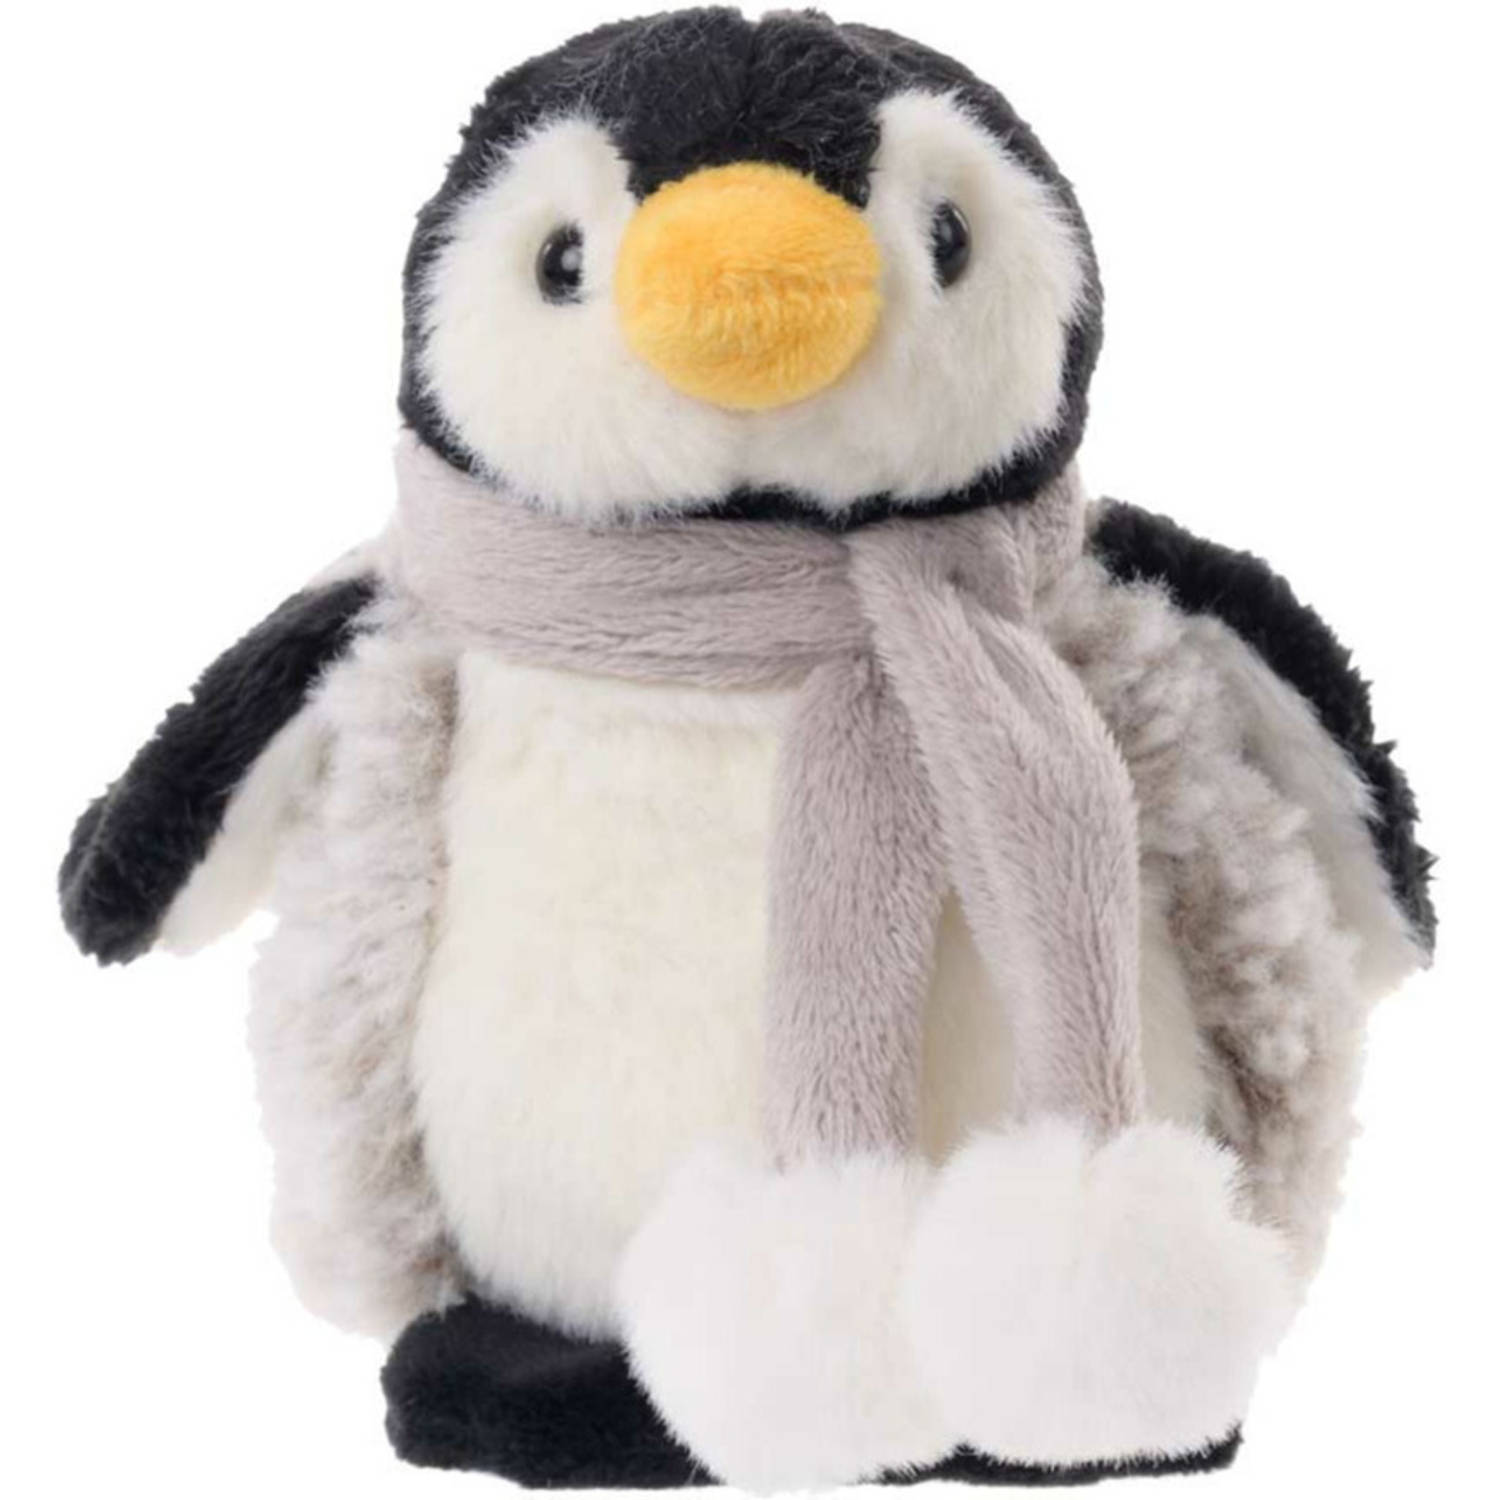 Bukowski pluche pinguin knuffeldier - grijs/wit - staand - 15 cm - Luxe kwaliteit knuffels